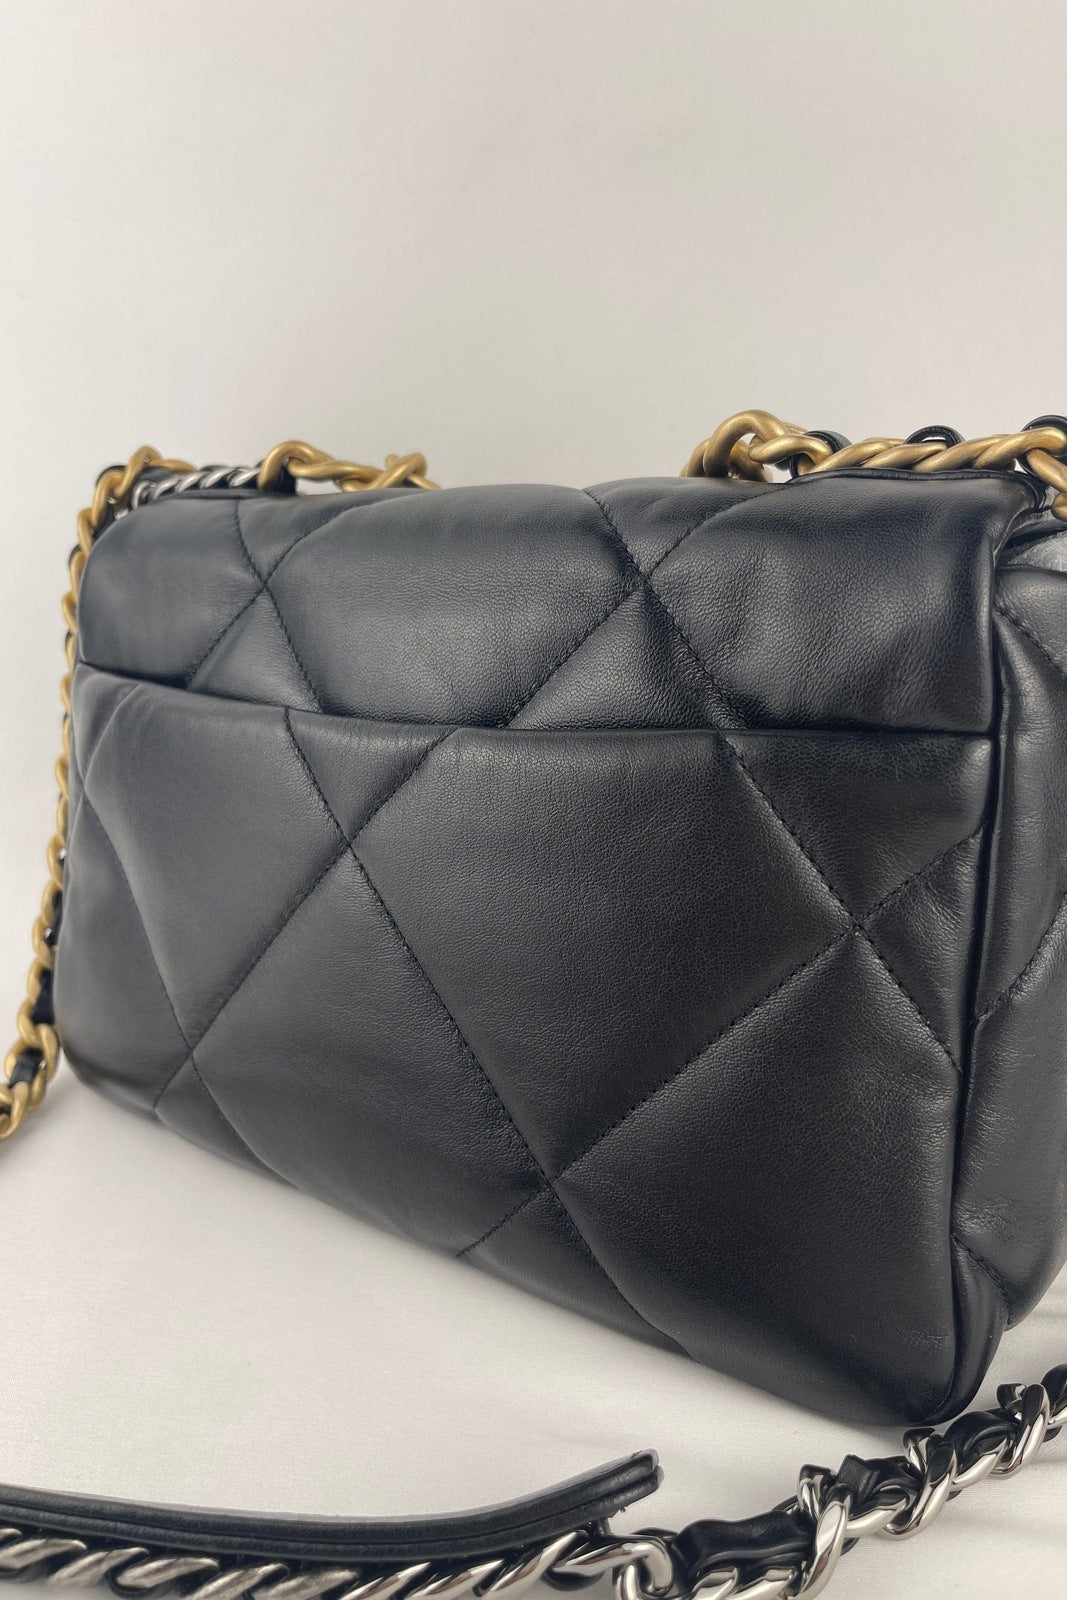 Chanel 19 Flap Bag Small Black GHW bag-Chanel 19 Flap Bag Medium